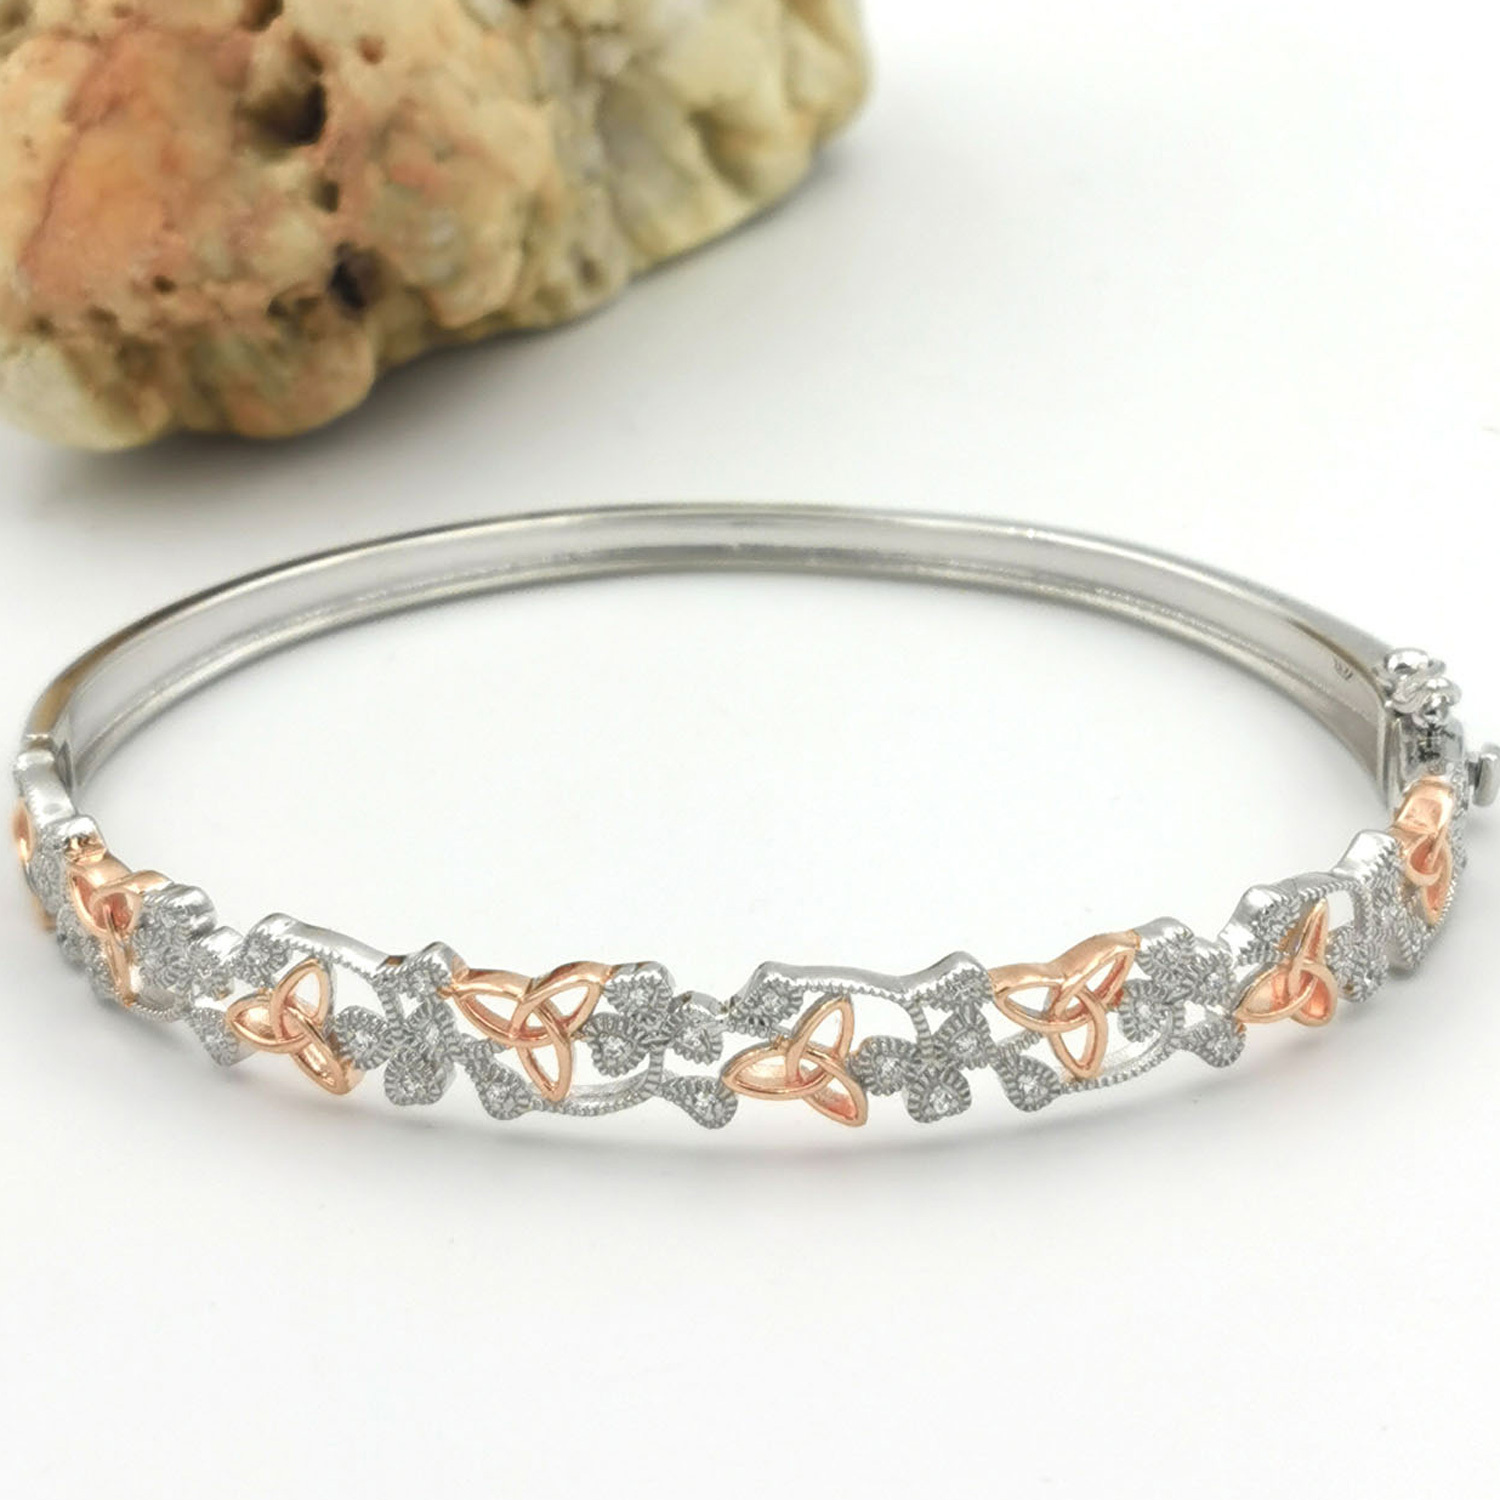 1pc Stainless Steel Irish Knot Bangle Bracelet | SHEIN